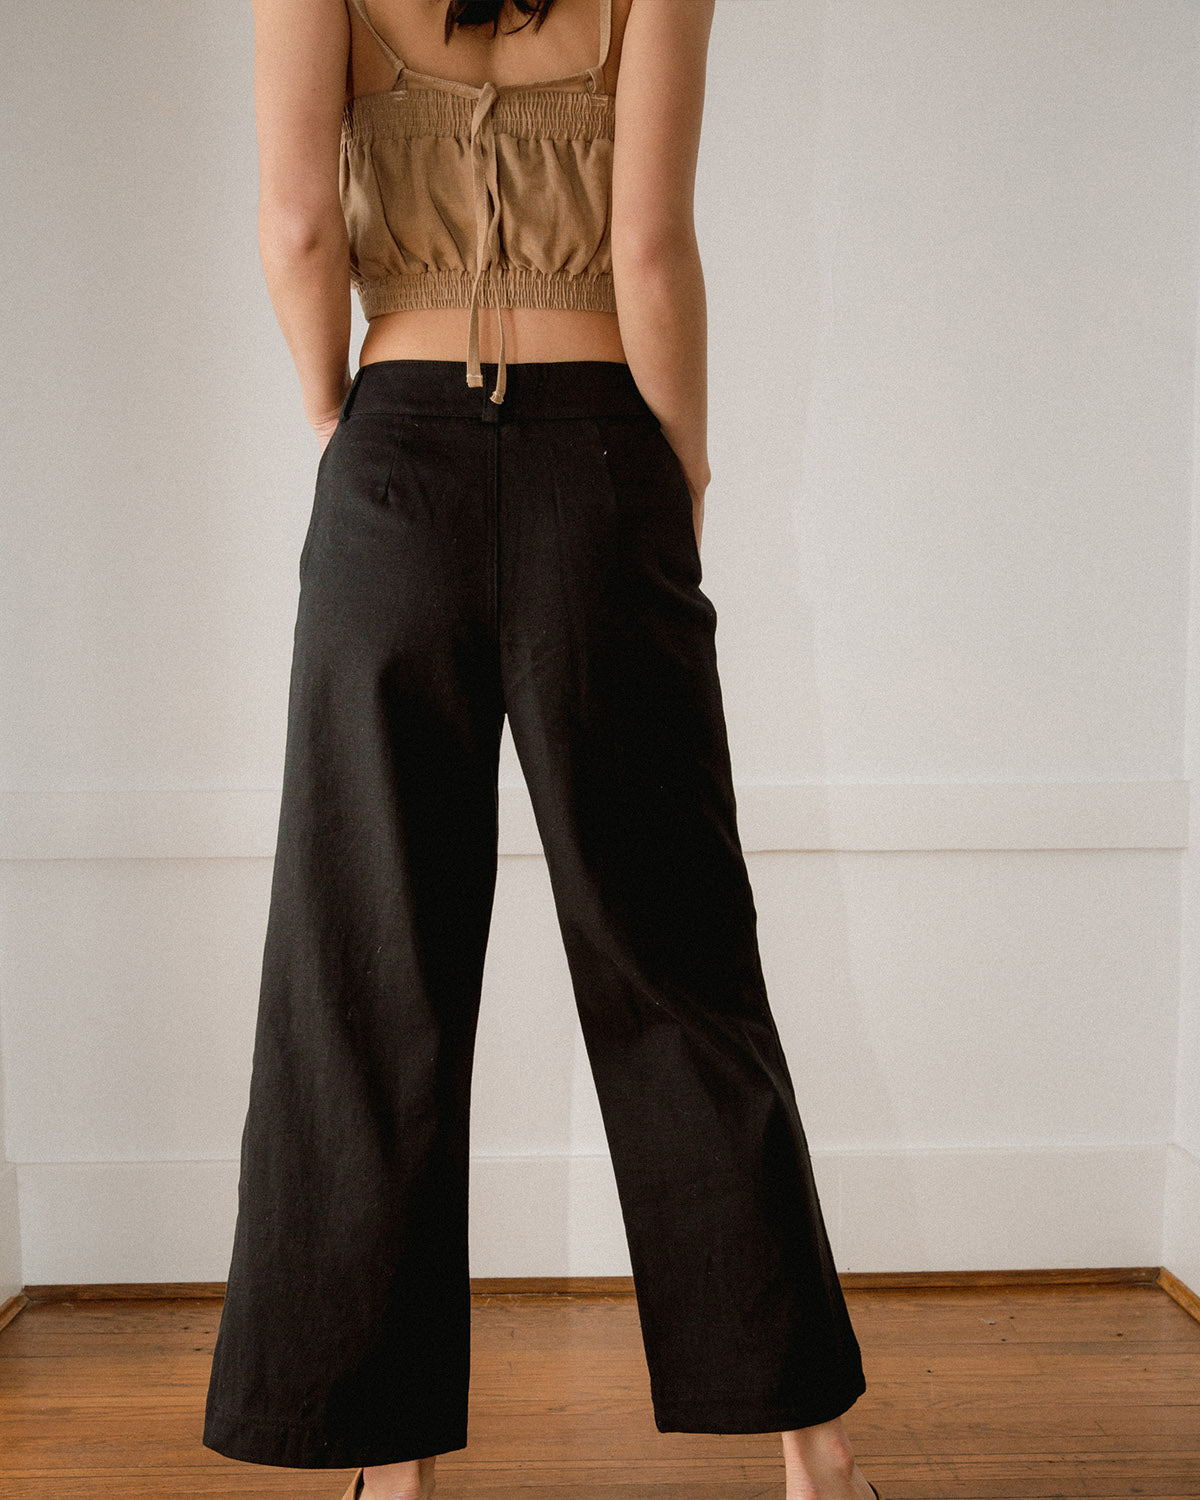 Womens High Waist Crop Pants for Curvy HIPS and Thighs | Crop Slacks |  Dress Work Pants w/Pockets and Stretch | Black Khaki